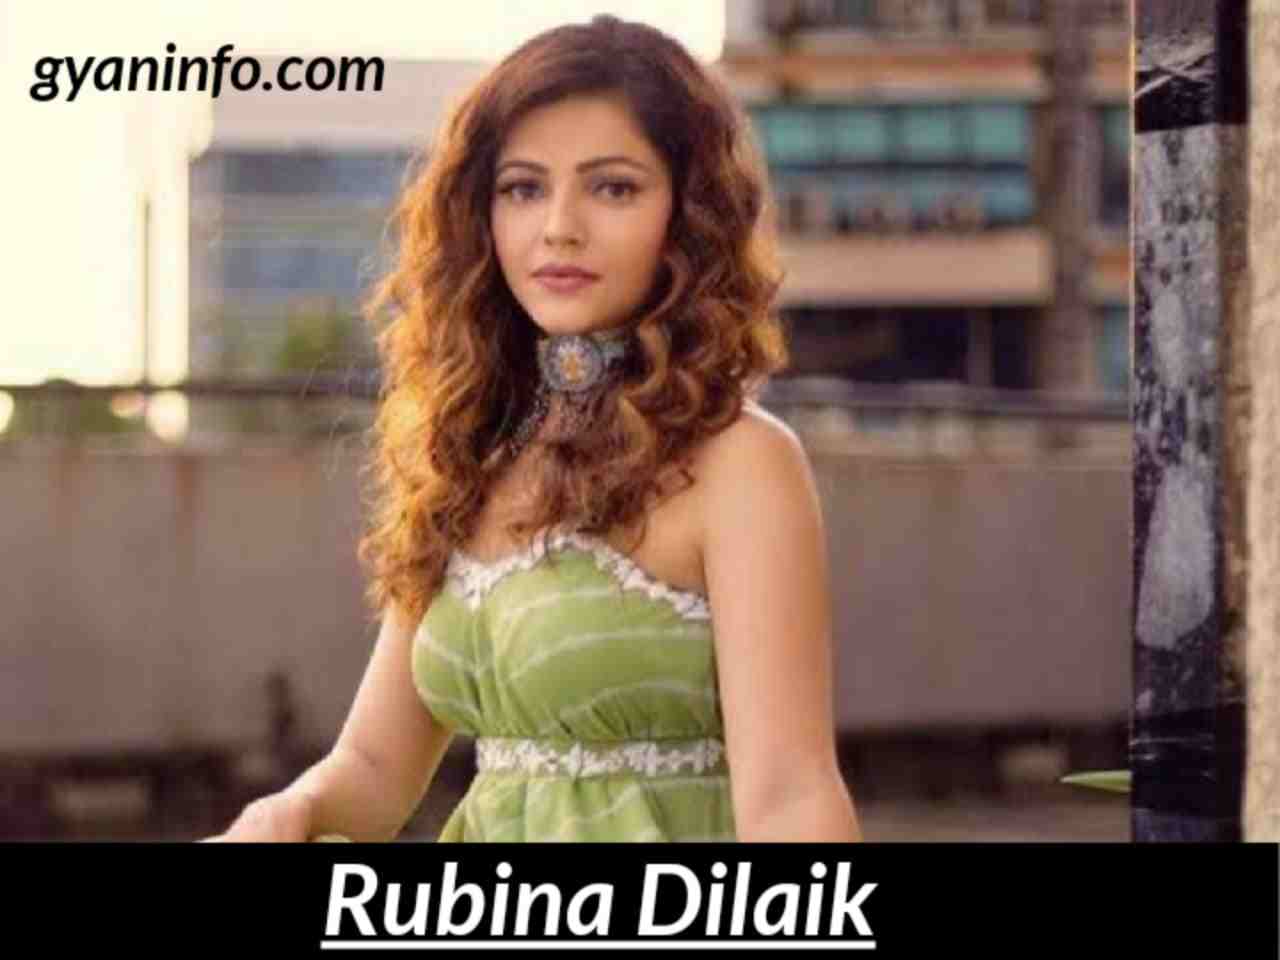 Rubina Dilaik (Actress) Biography, Age, Height, Weight, Body Measurement, TV Show, Boyfriend, Husband, Family, Parents, Photo, Net Worth, Wiki & More